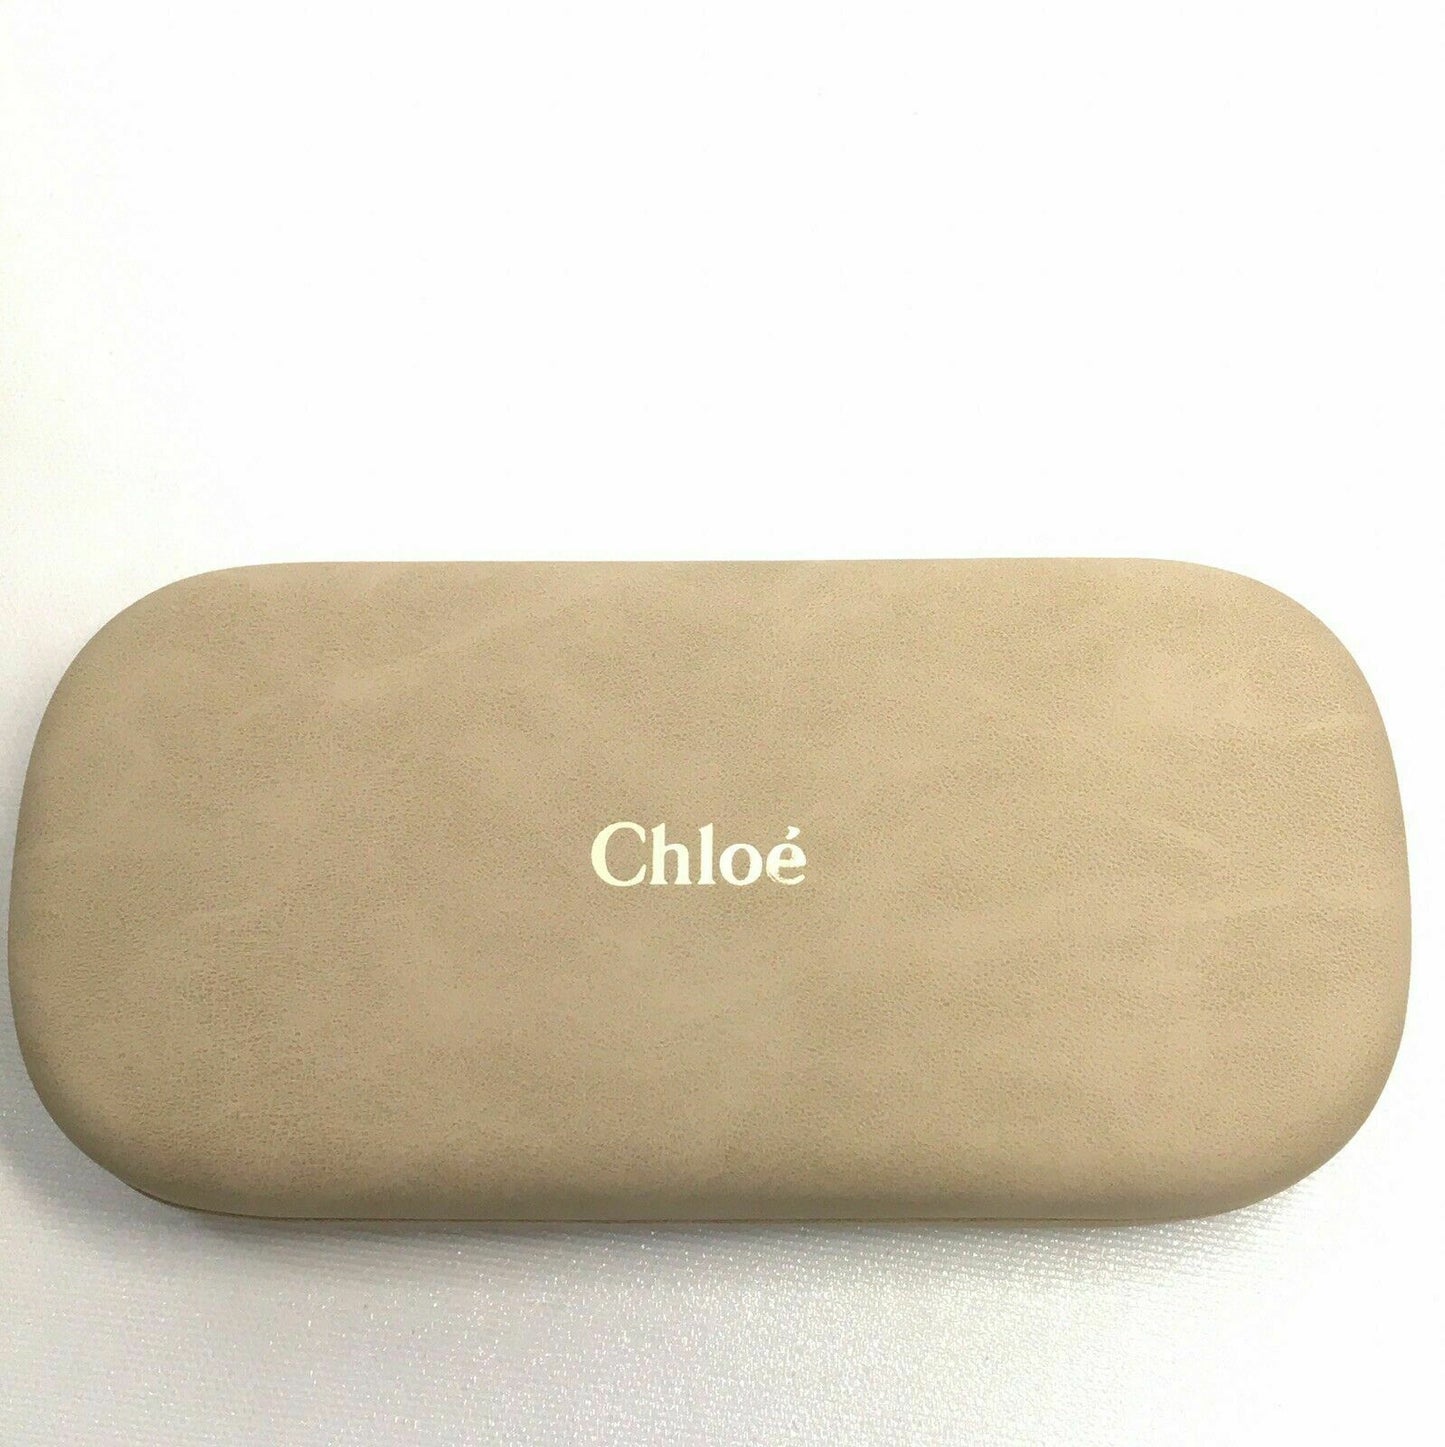 Chloe CE2663-036 50 50mm New Eyeglasses